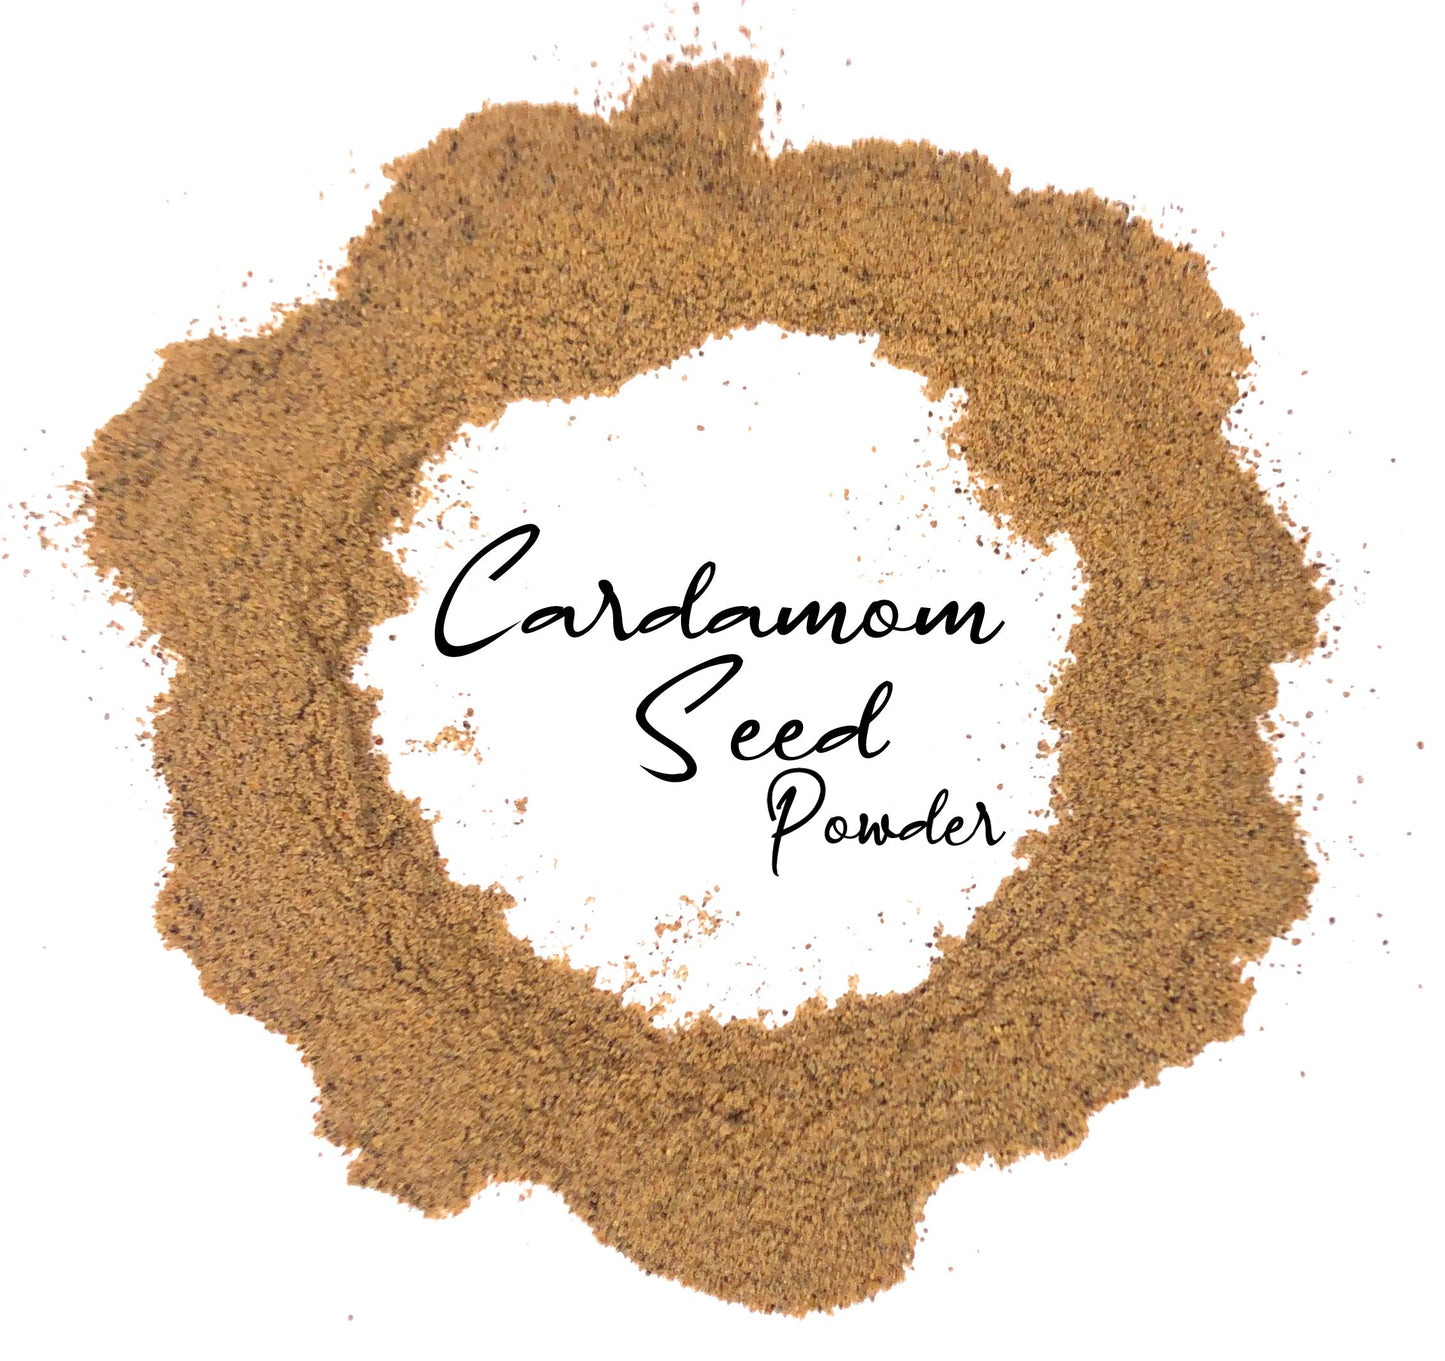 Wholesale Spices & Herbs - Cardamom Seed Powder, Organic 8oz (227g) Bag